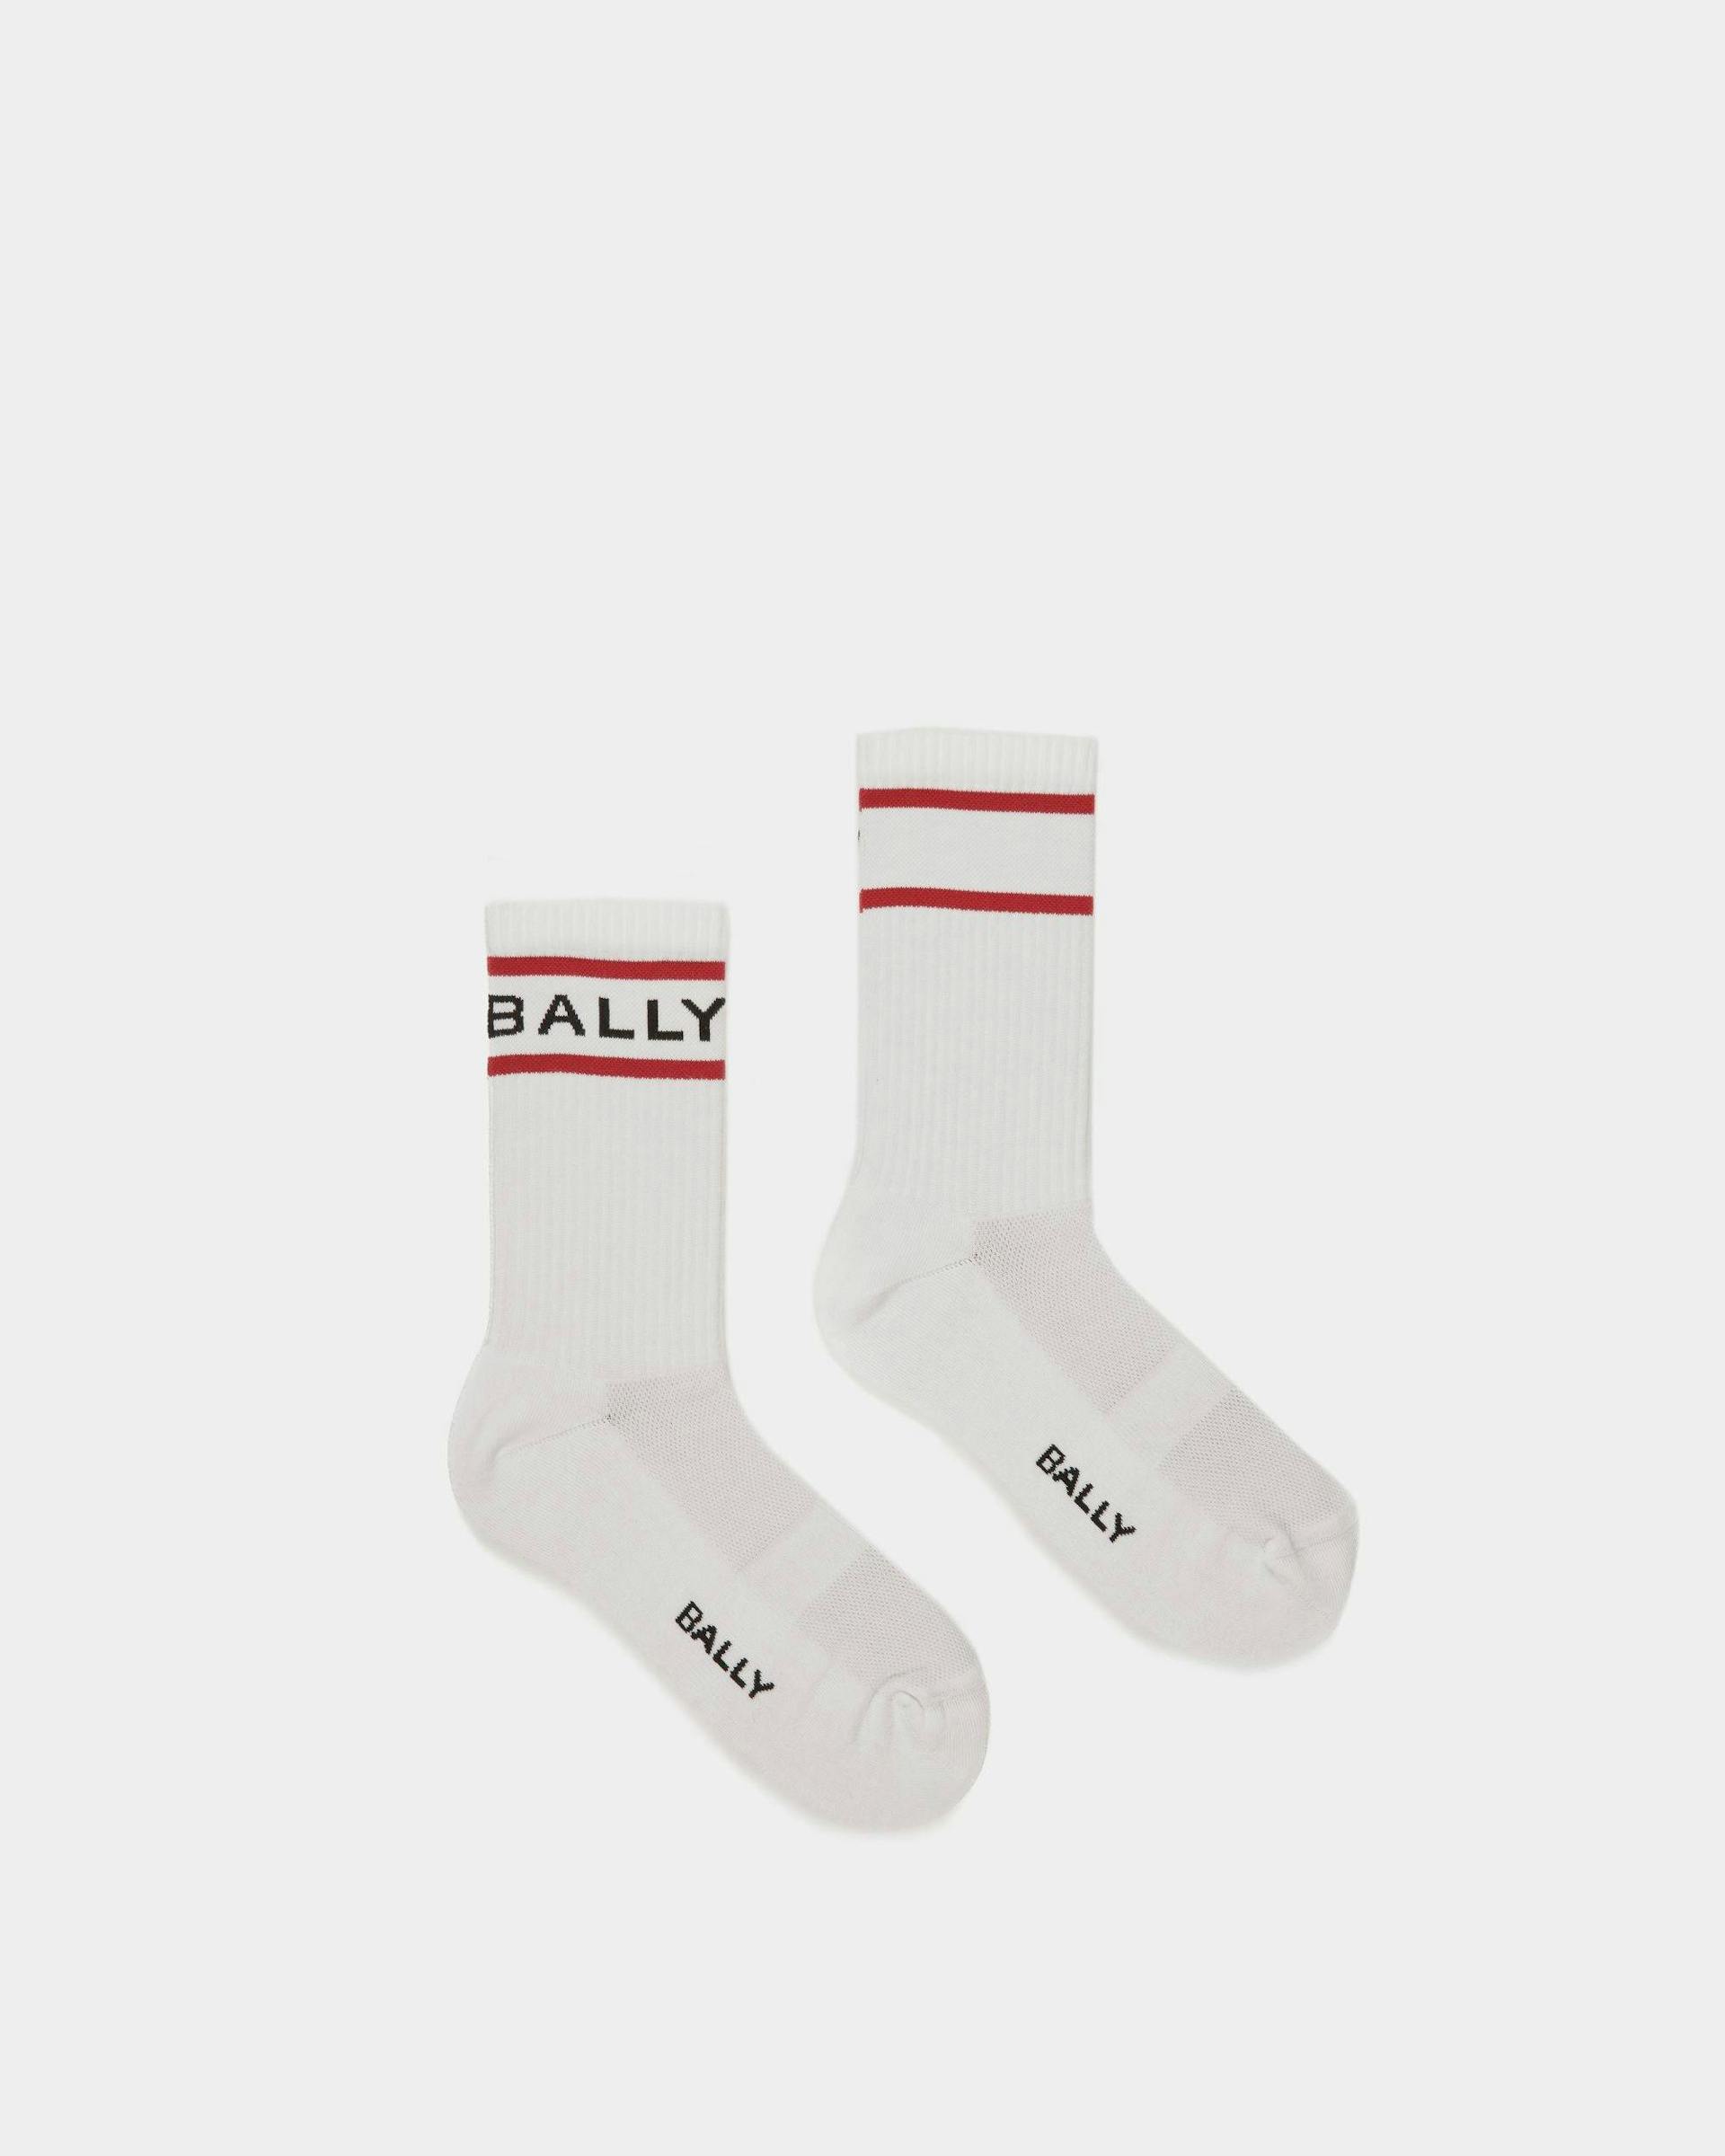 Calze Bally Stripe In Bianco E Rubino Scuro - Uomo - Bally - 01